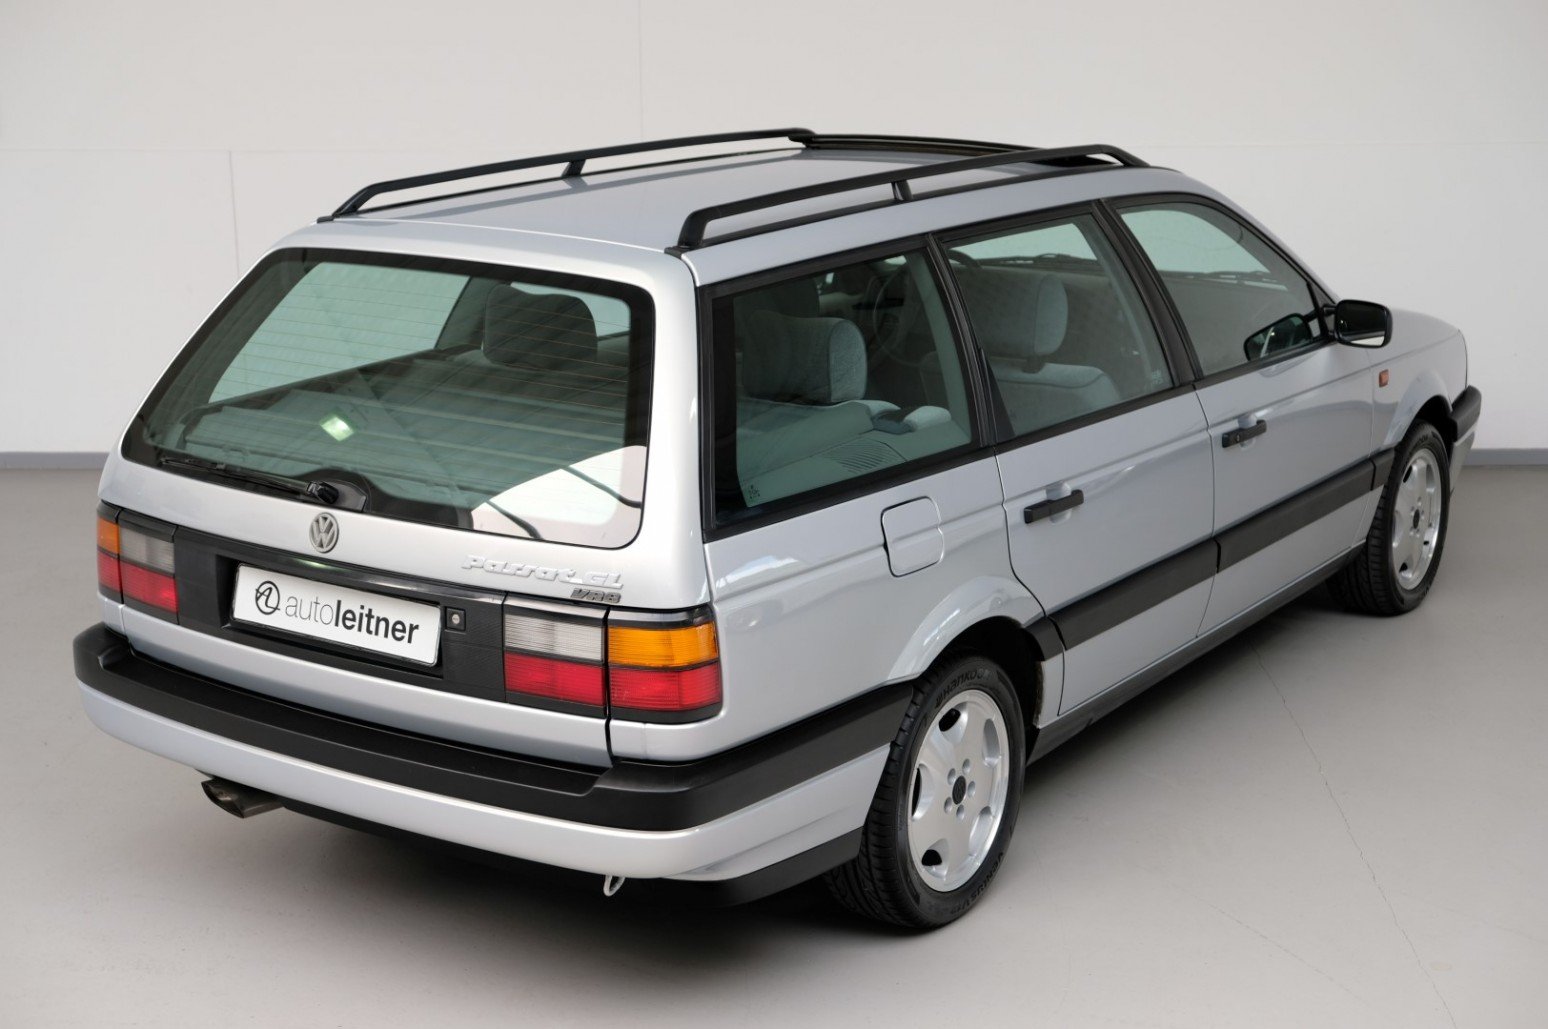 Фольксваген пассат 3 универсал. VW Passat b3 variant. Пассат б3 универсал. VW Passat b3 универсал. Фольксваген Пассат универсал 1992.